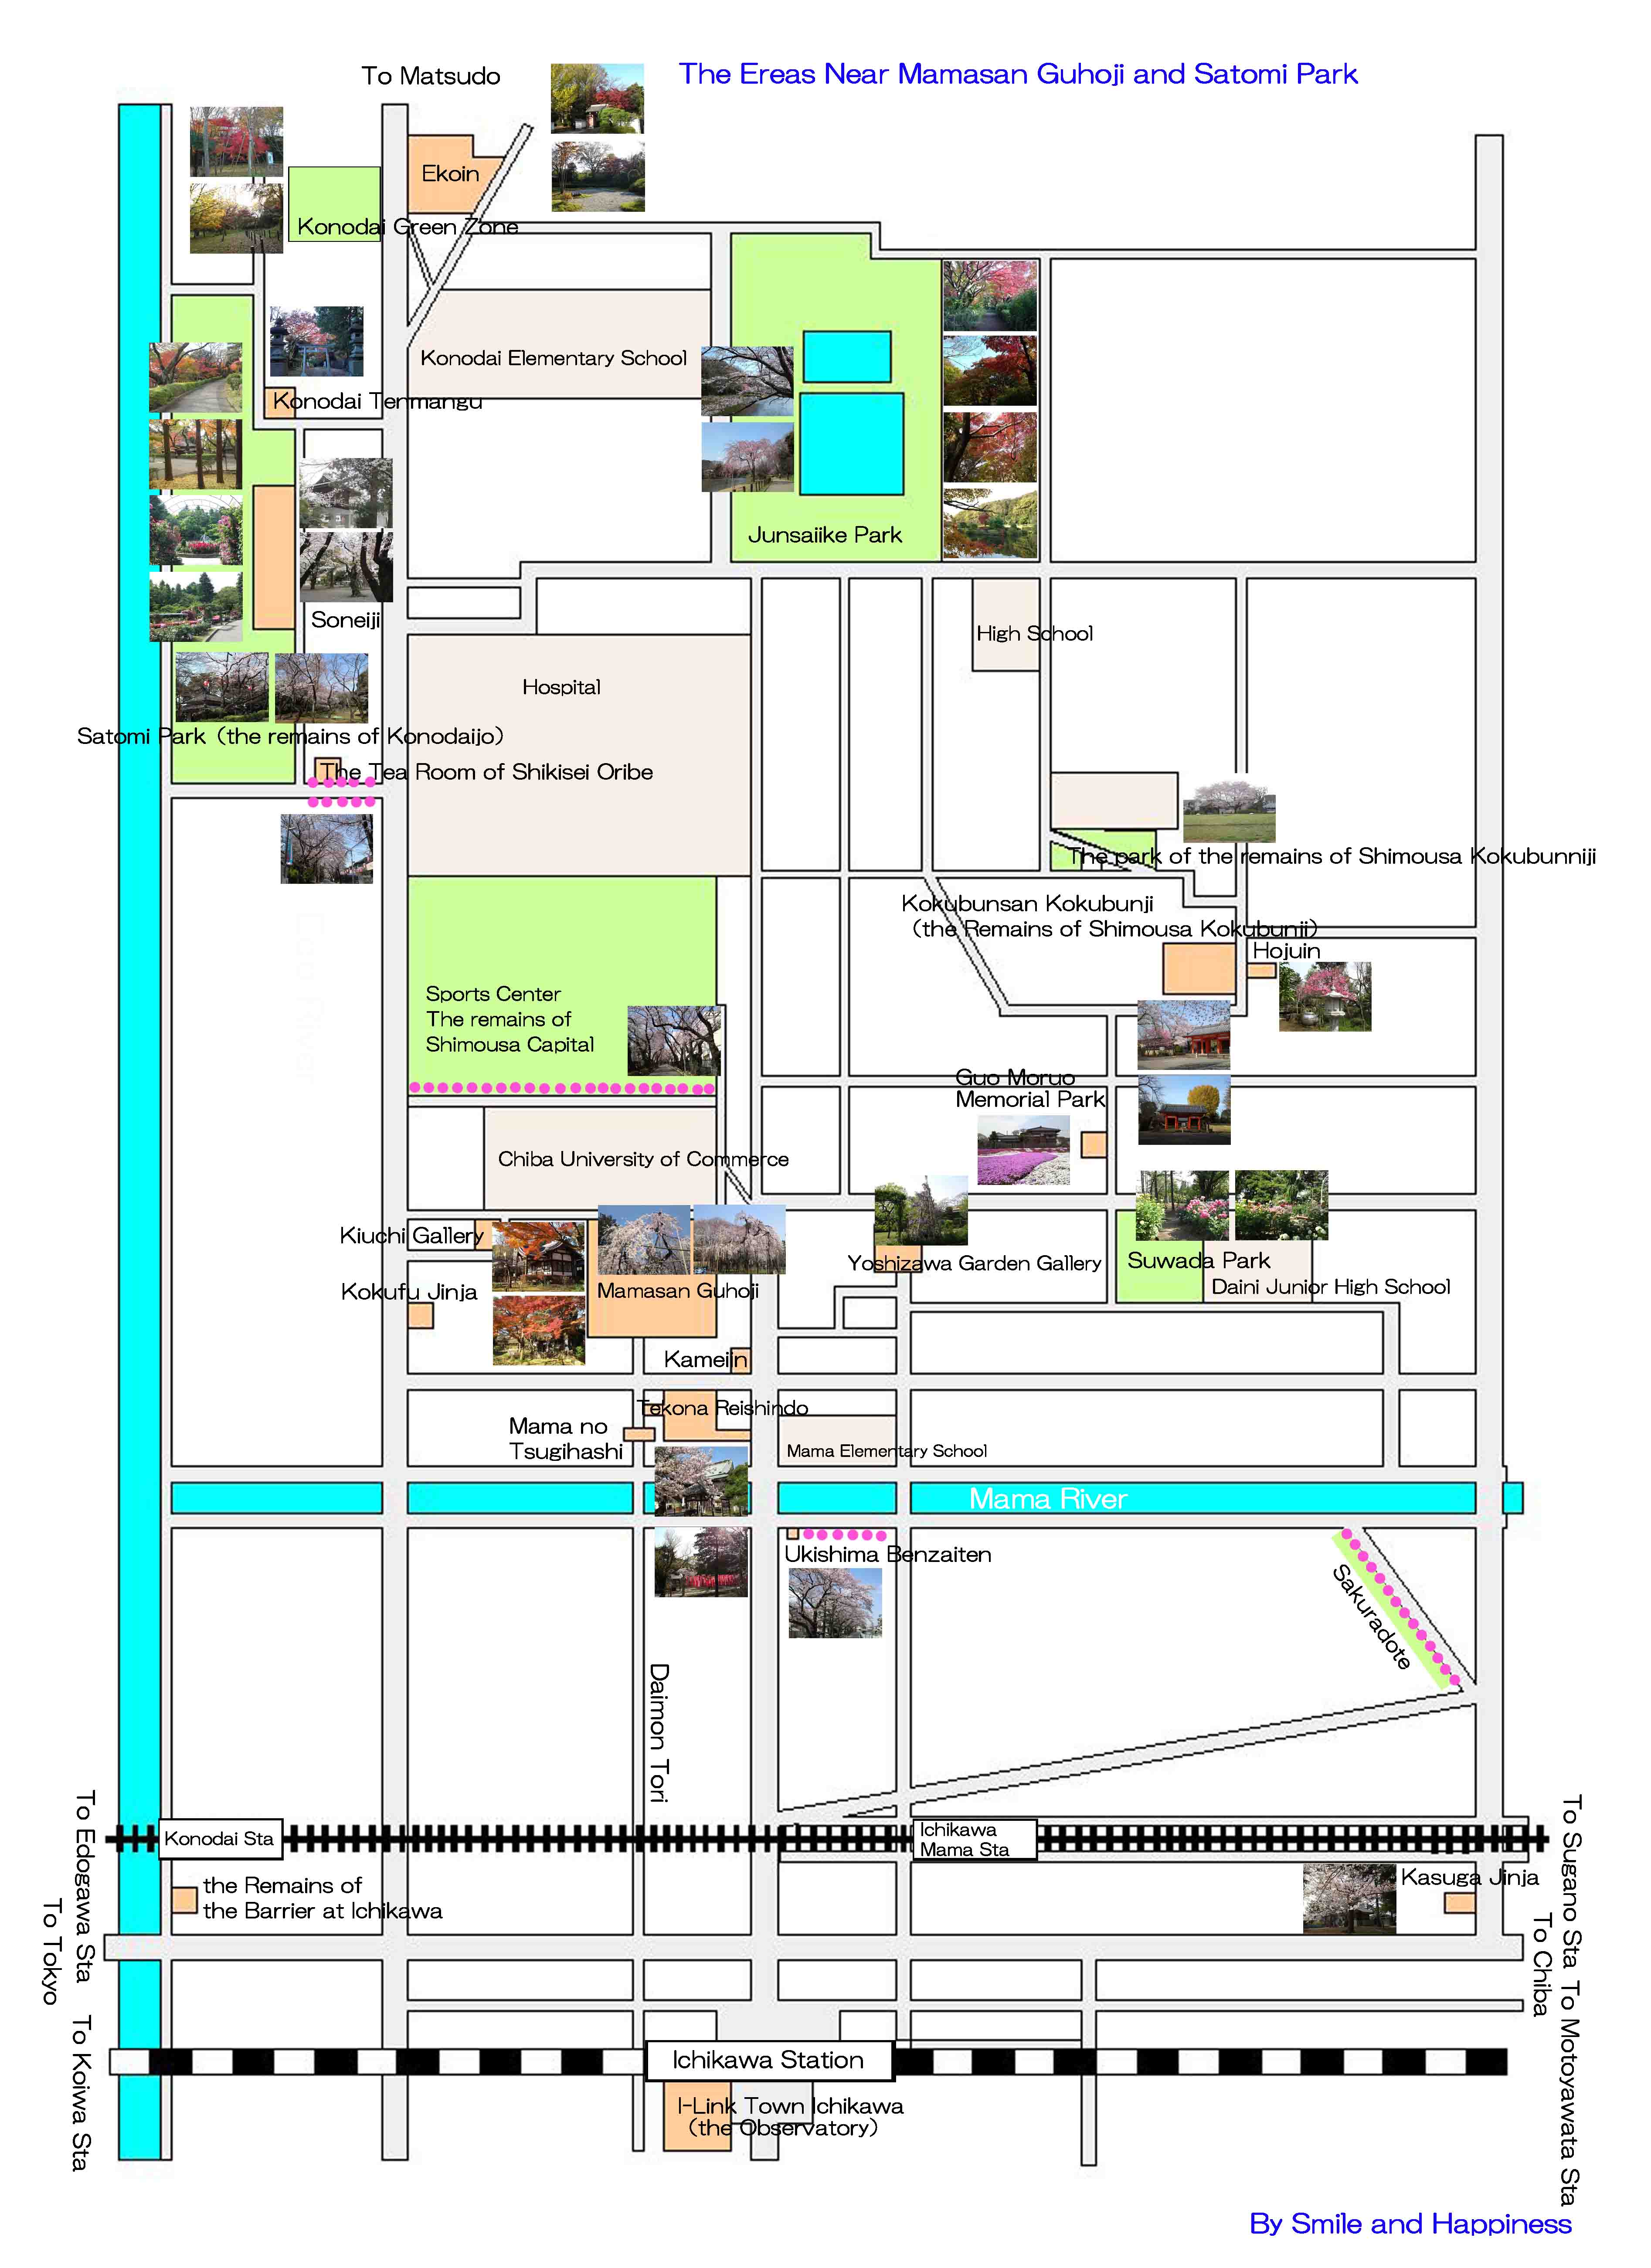 the map to Yoshizawa Garden Gallery